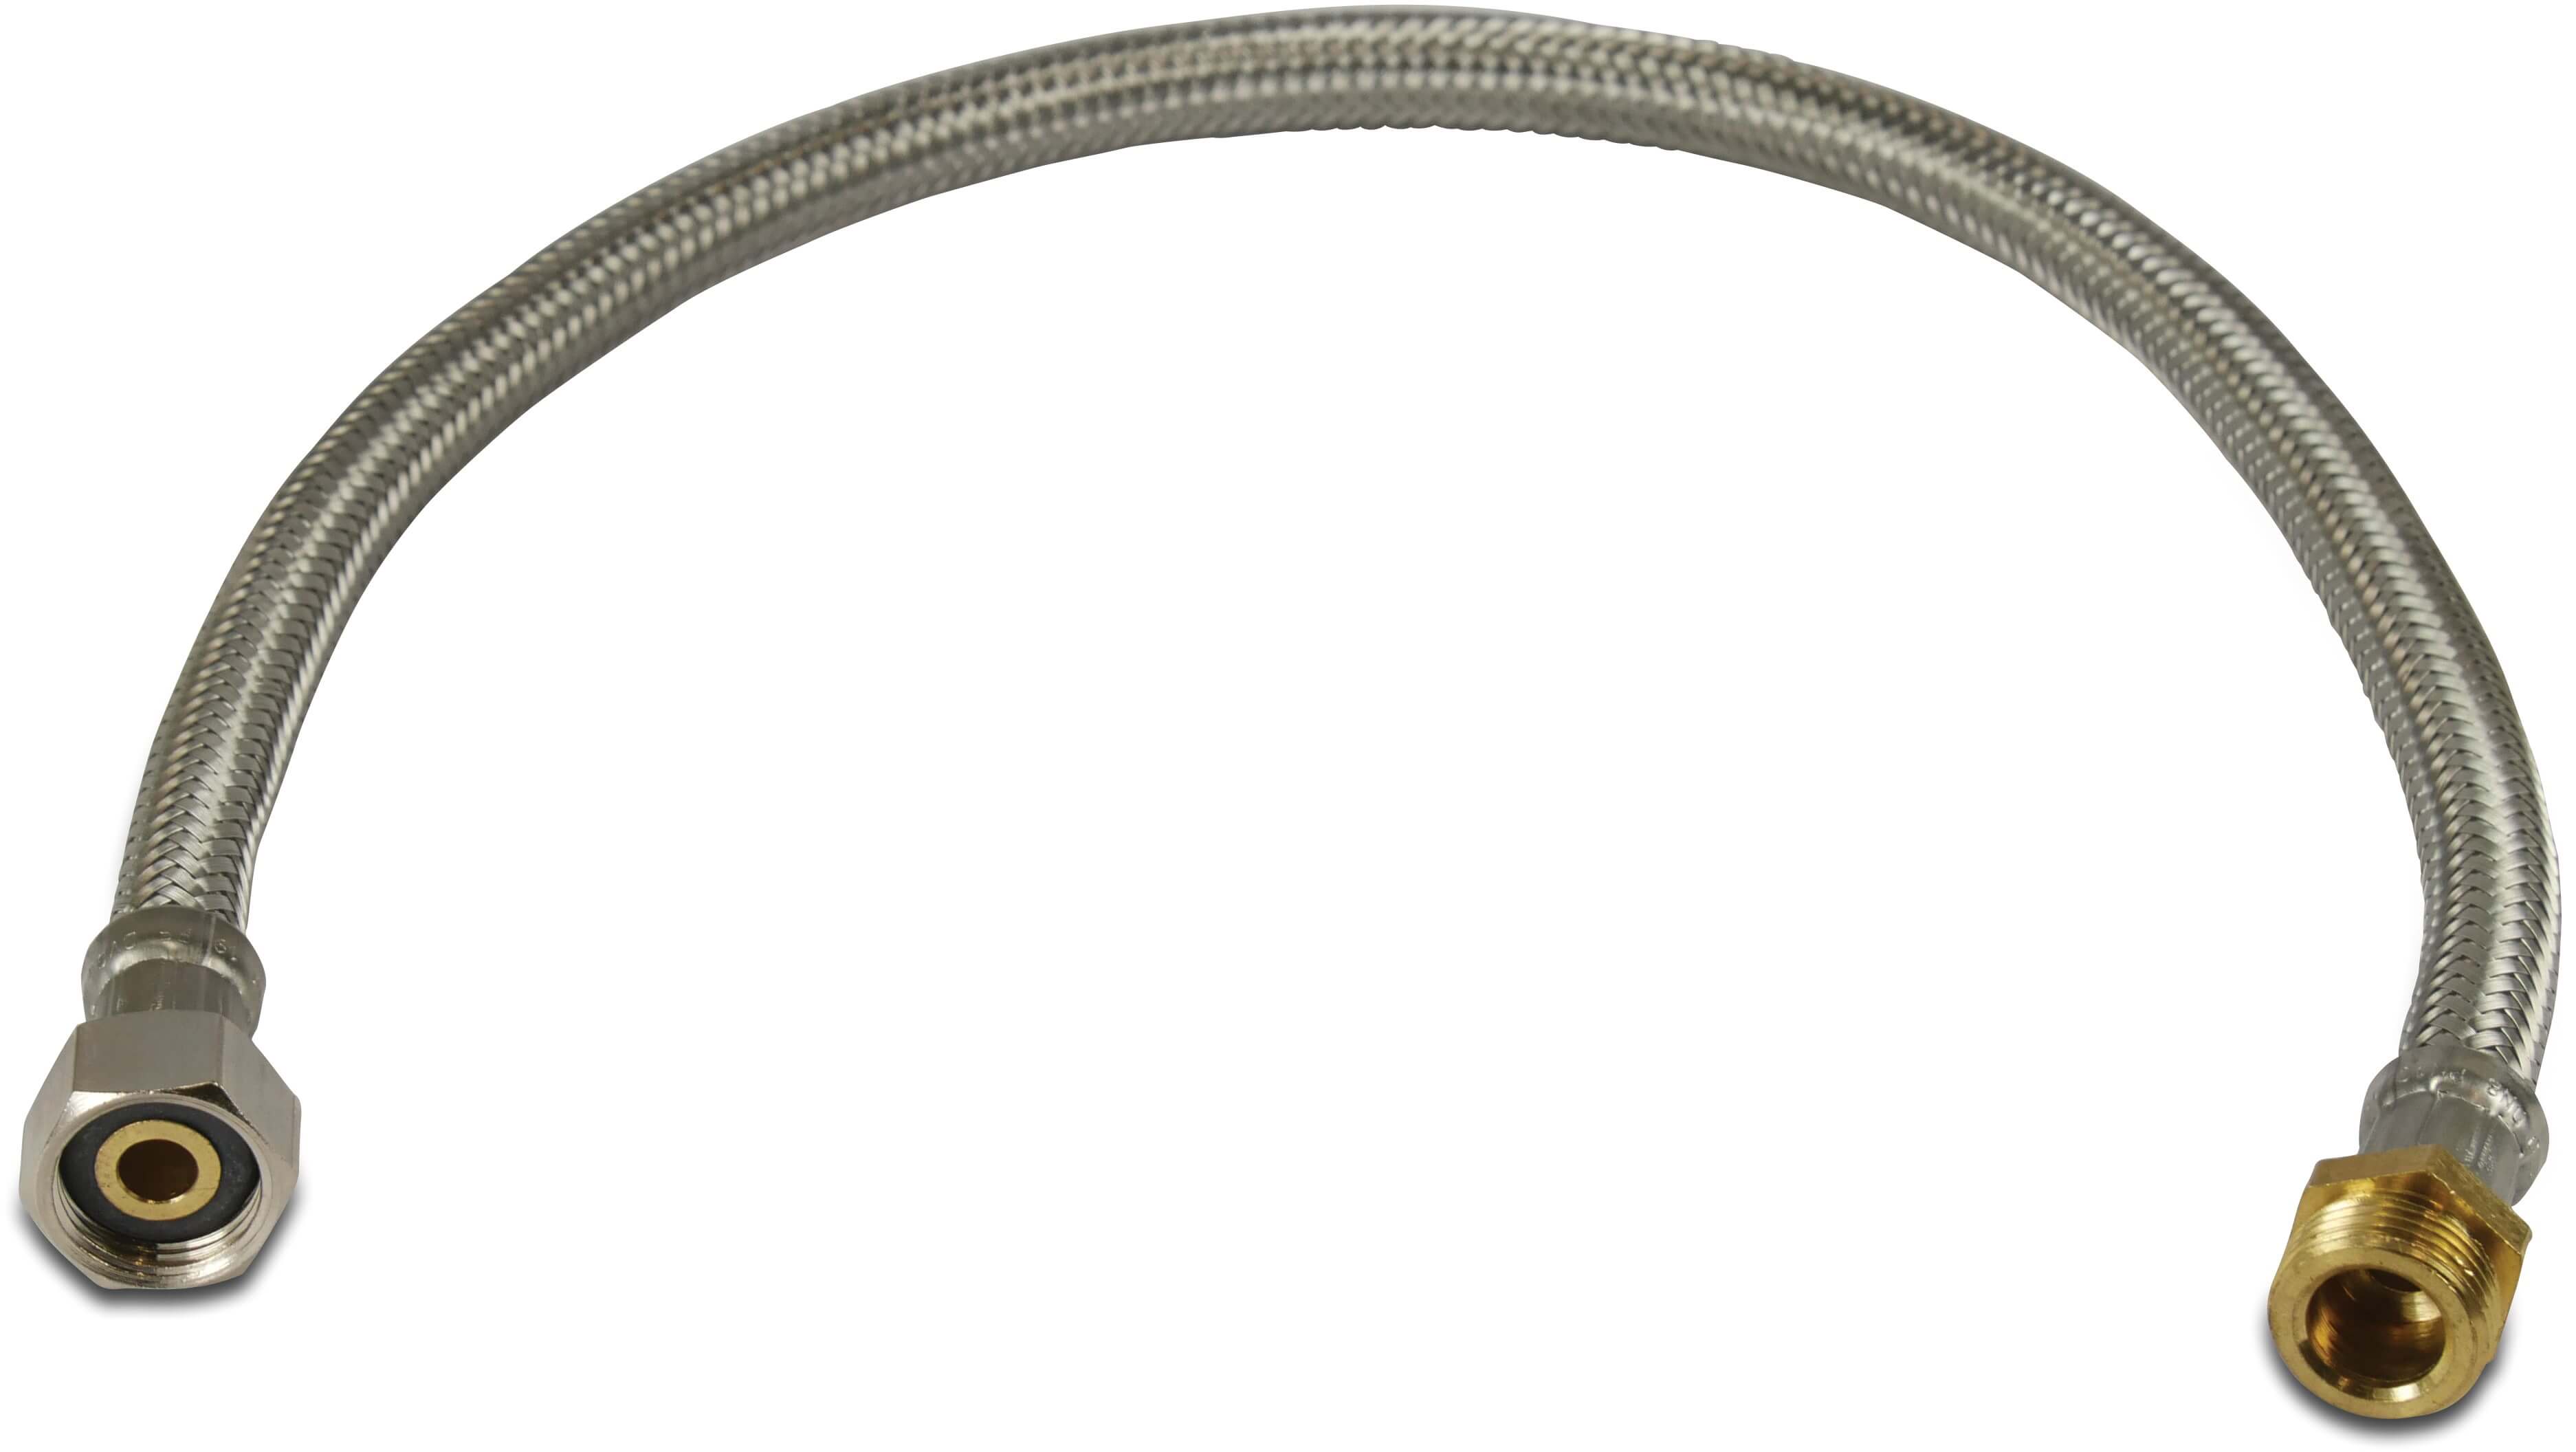 Braided hose stainless steel/silicone 3/8" male thread x female threaded nut 30cm KTW/DVGW type straight